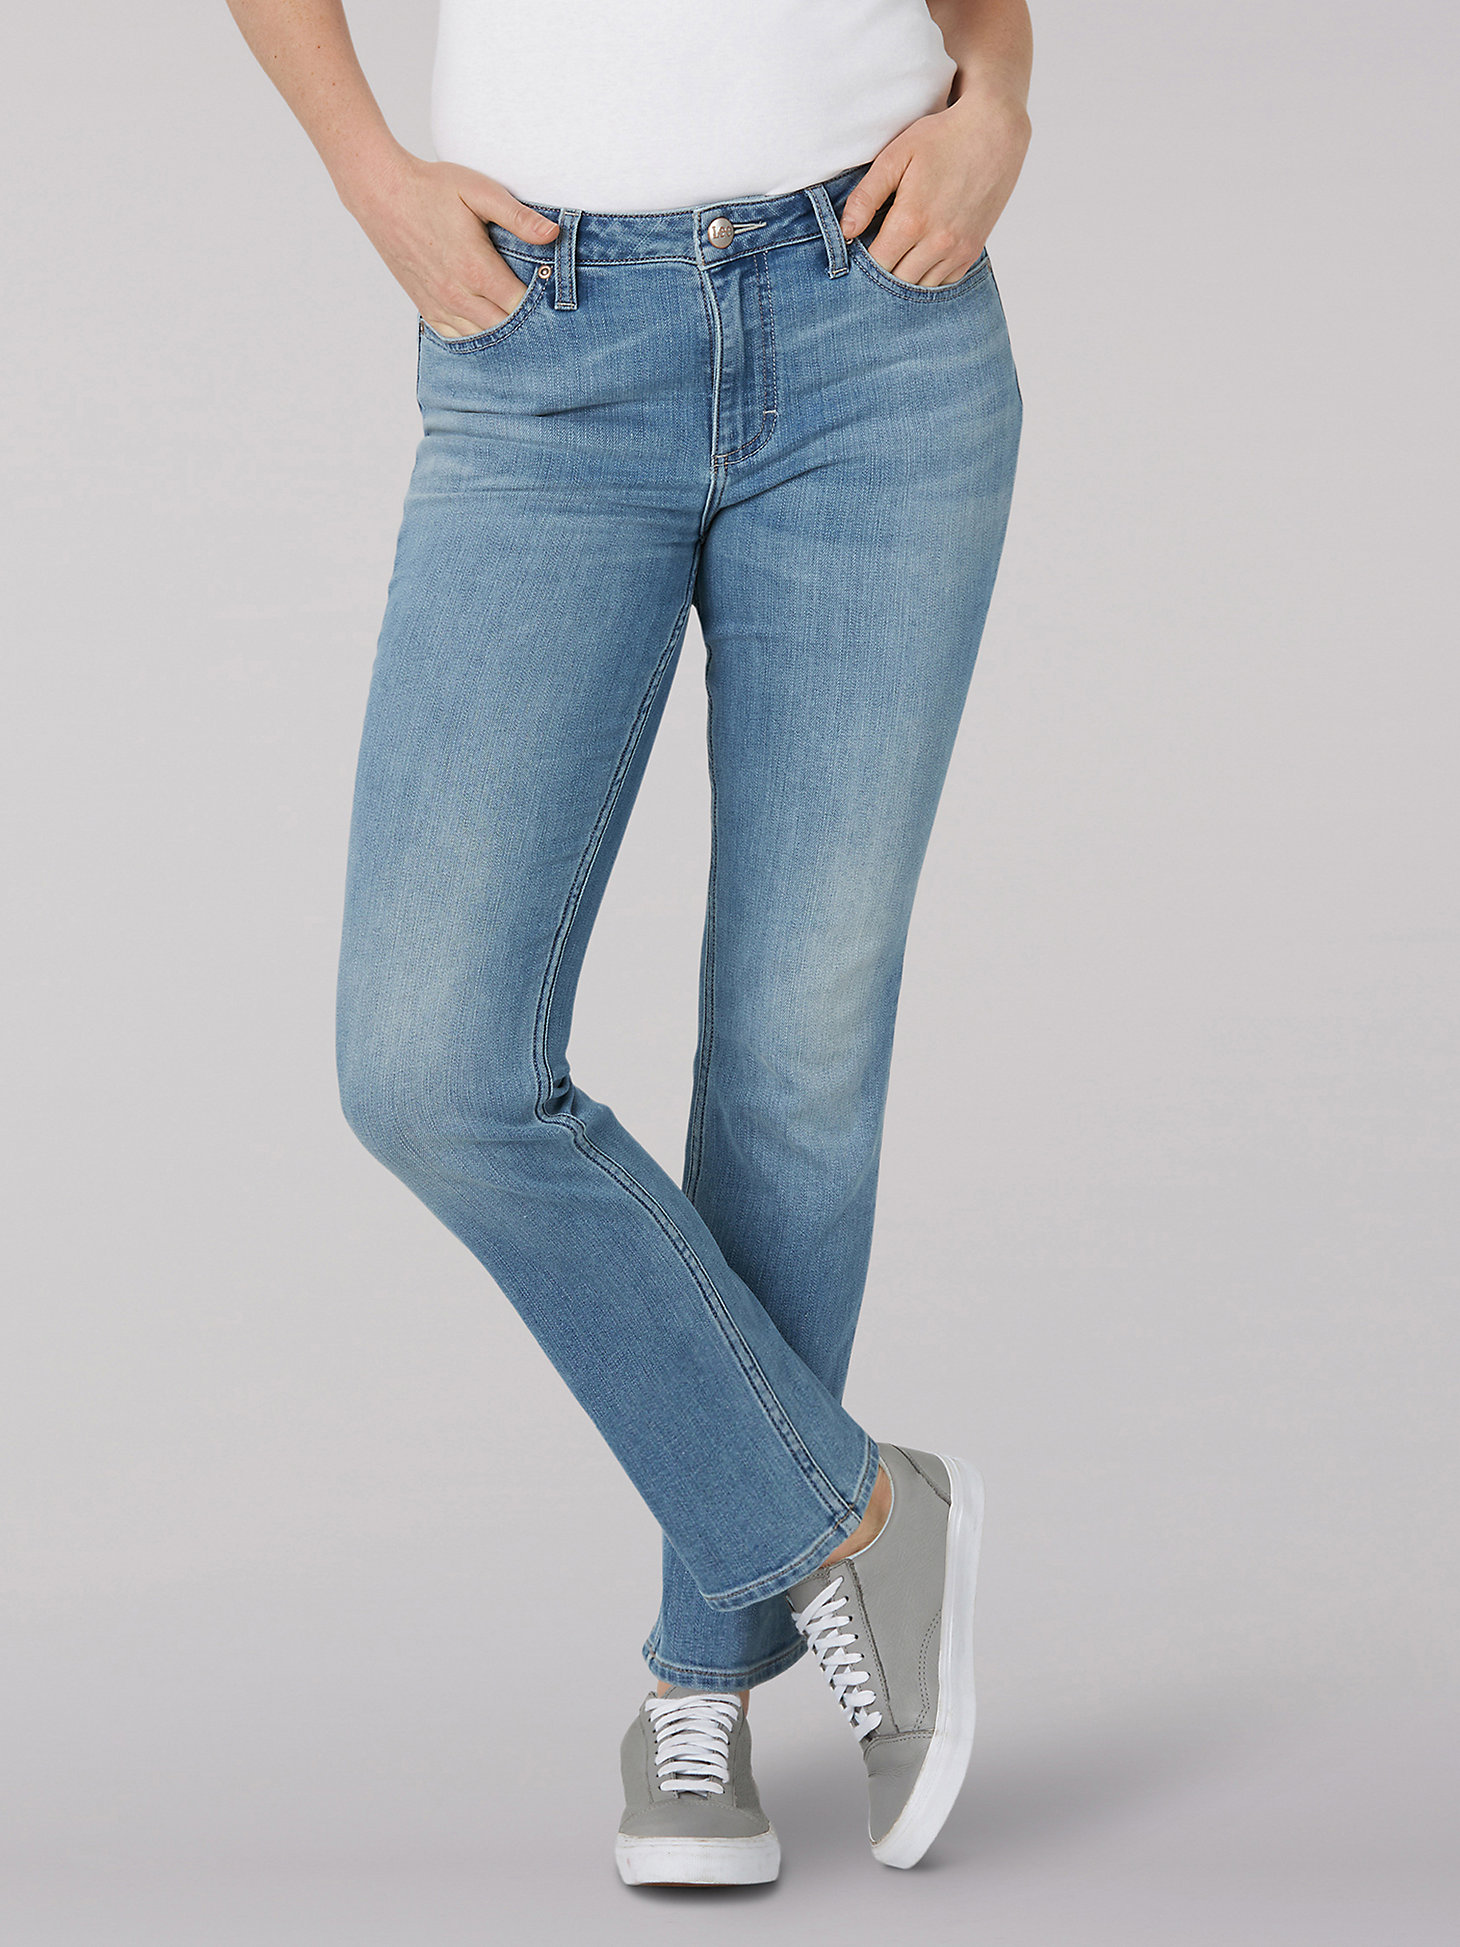 Women's Legendary Regular Straight Jean (Petite) in Anchor main view